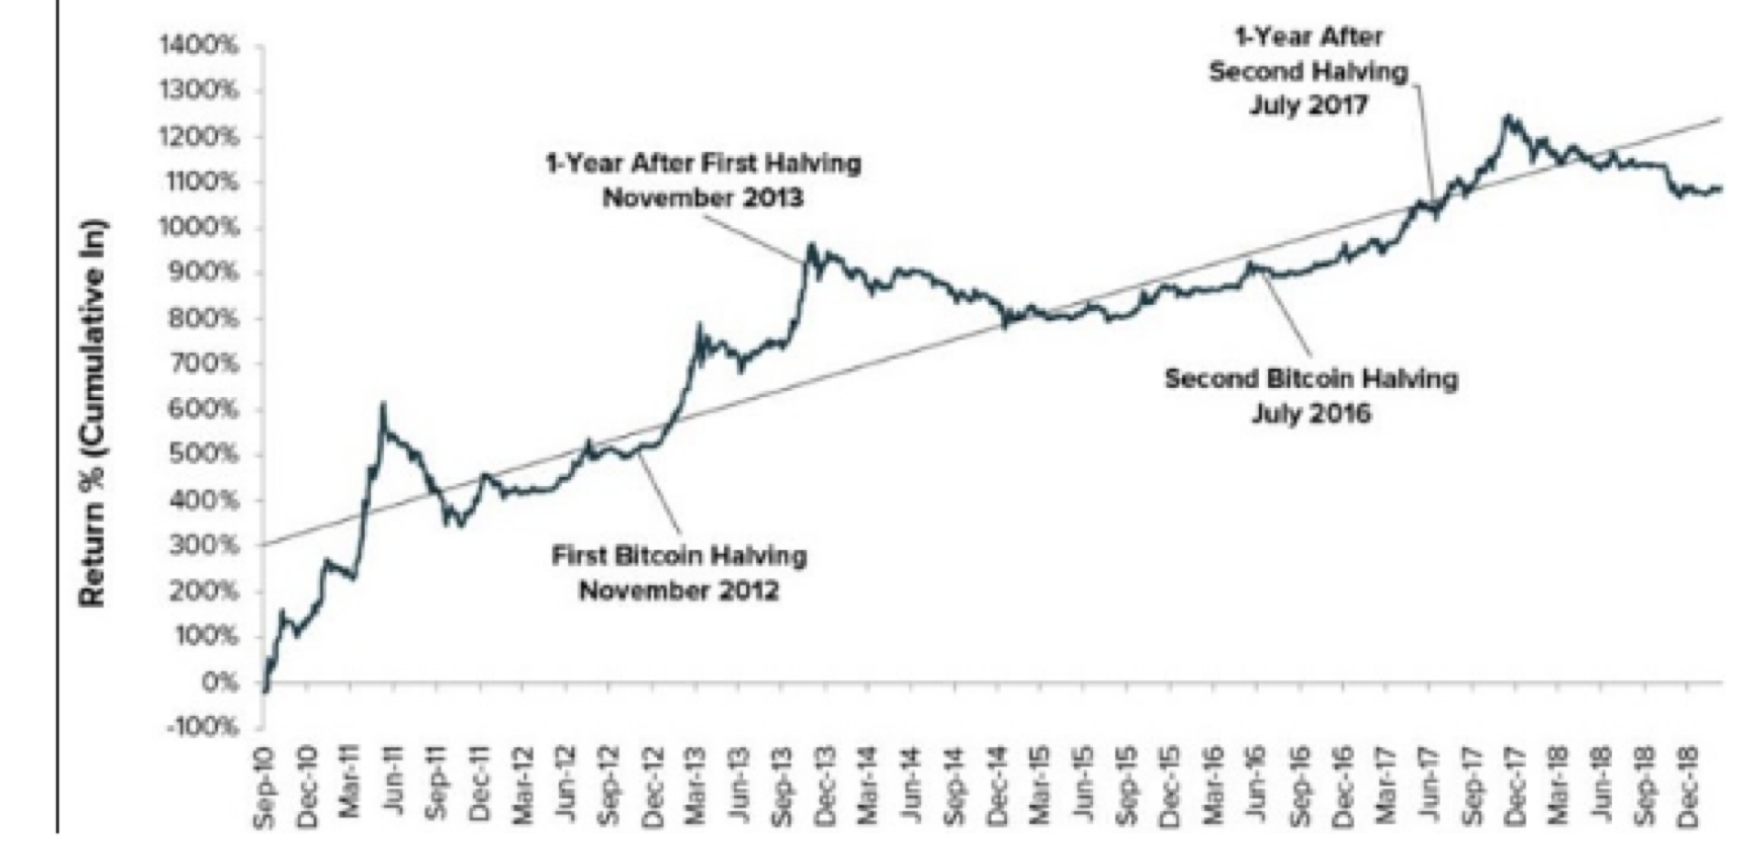 Litecoin Price History Chart - All LTC Historical Data